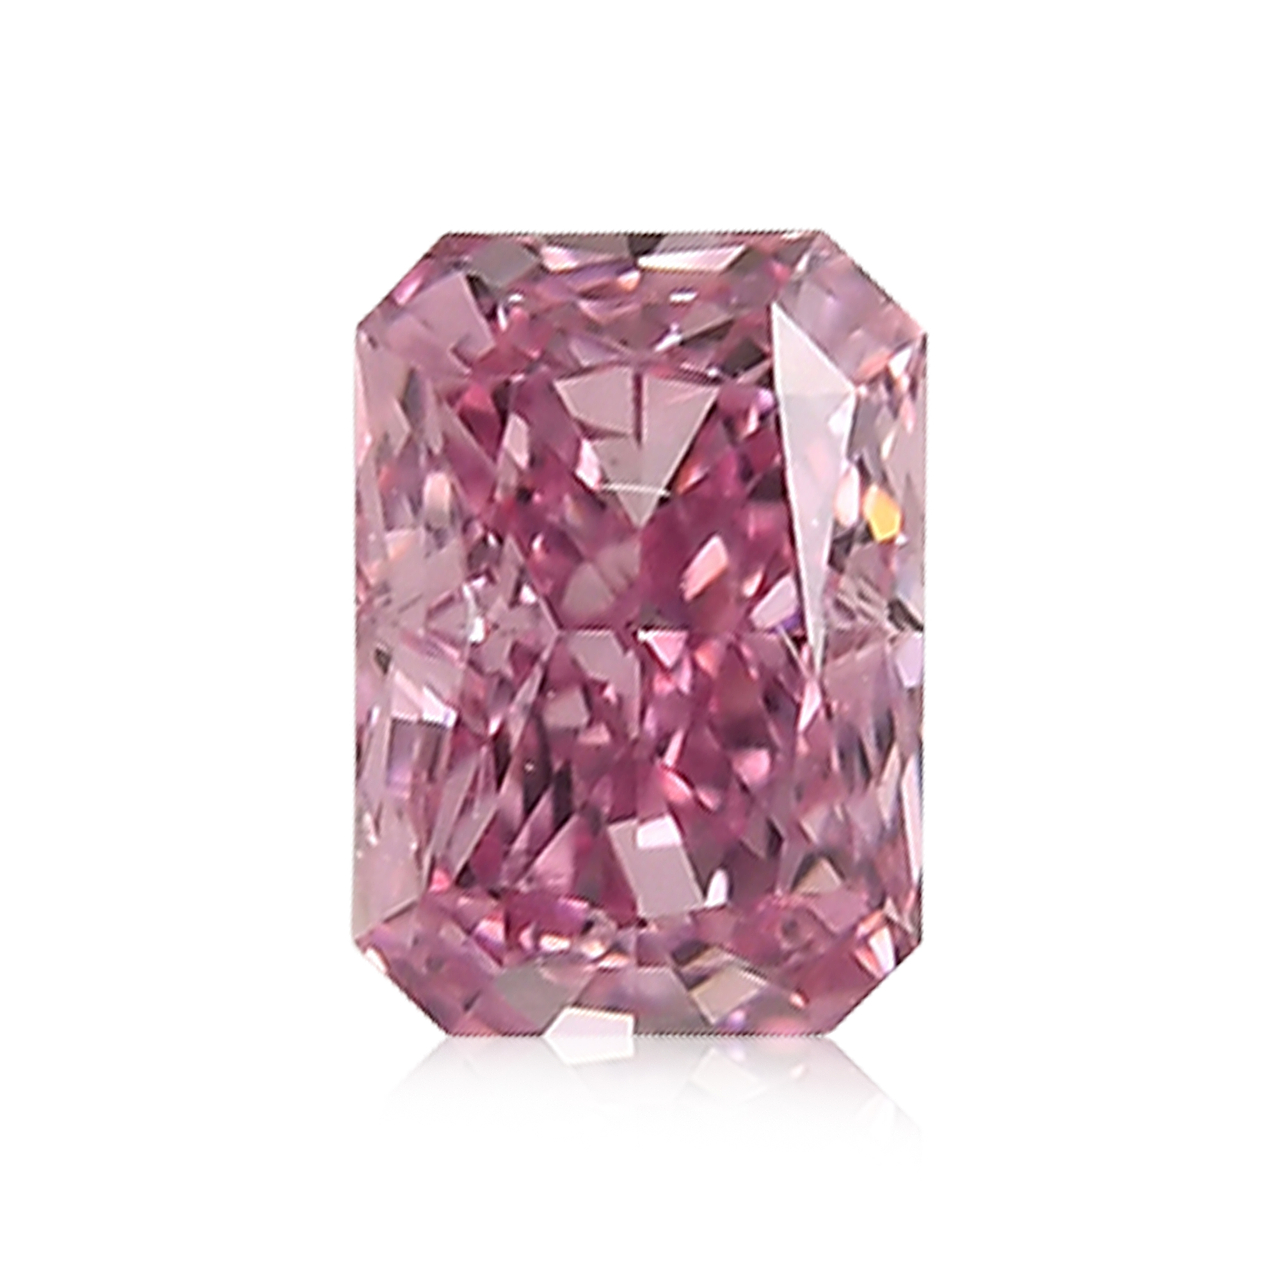 0.26 carat, Fancy Vivid Purple Pink Diamond, Radiant Shape, I1 Clarity,  GIA, SKU 515927